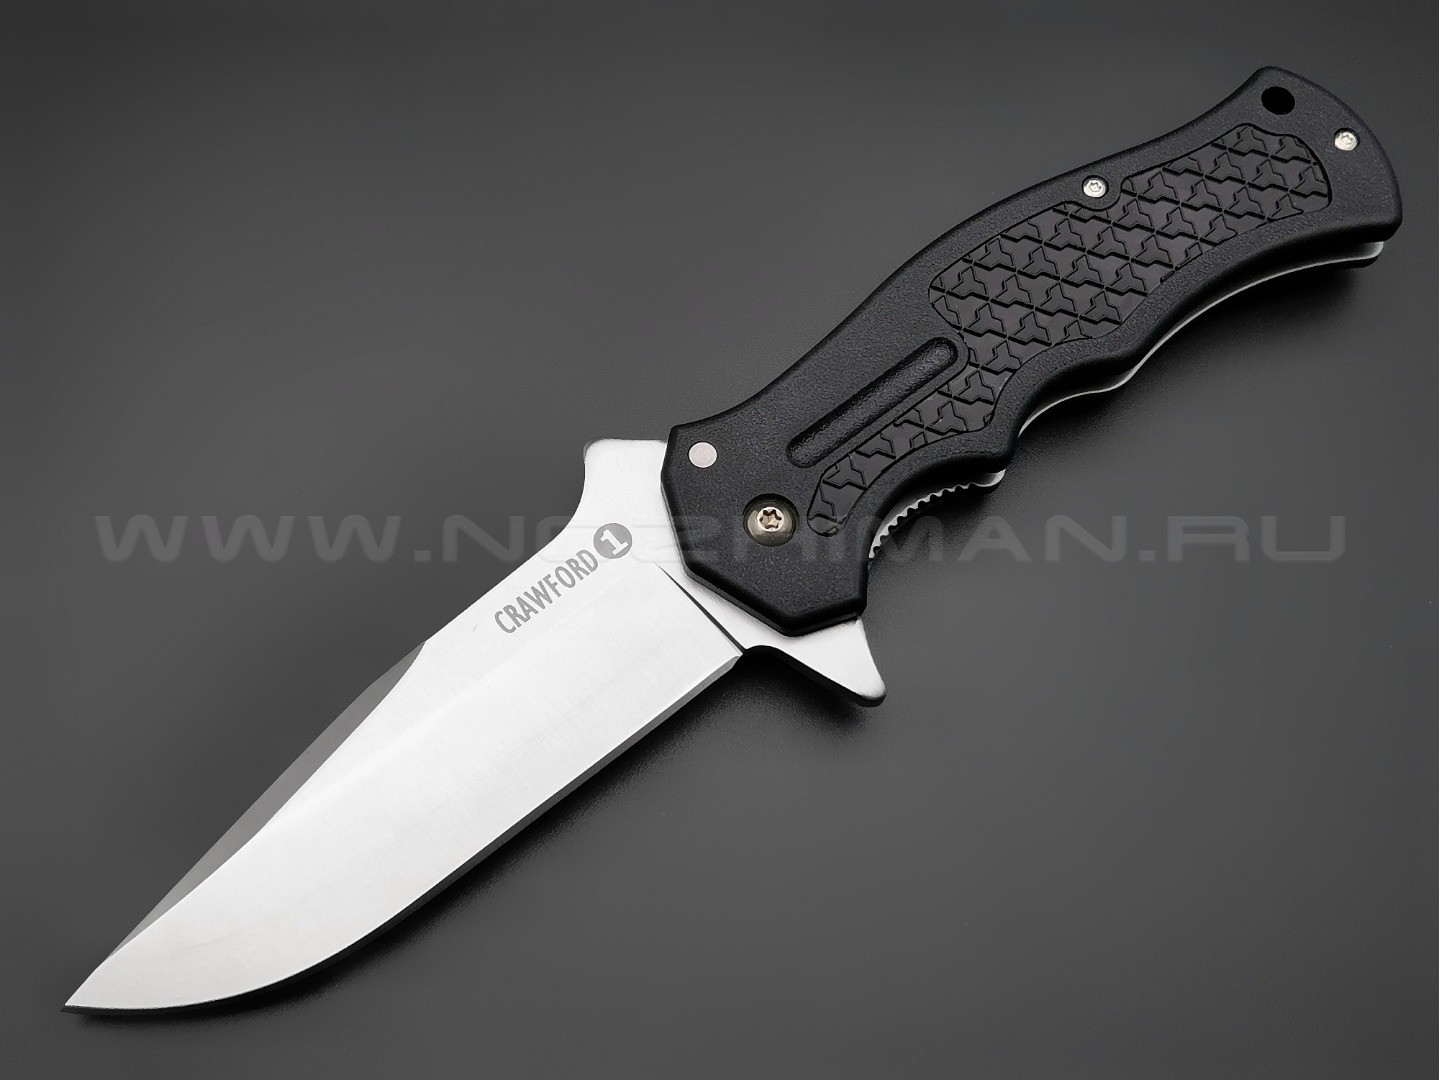 Нож Cold Steel Crawford Model 1 Black 20MWCB сталь 1.4116 рукоять Zy-Ex